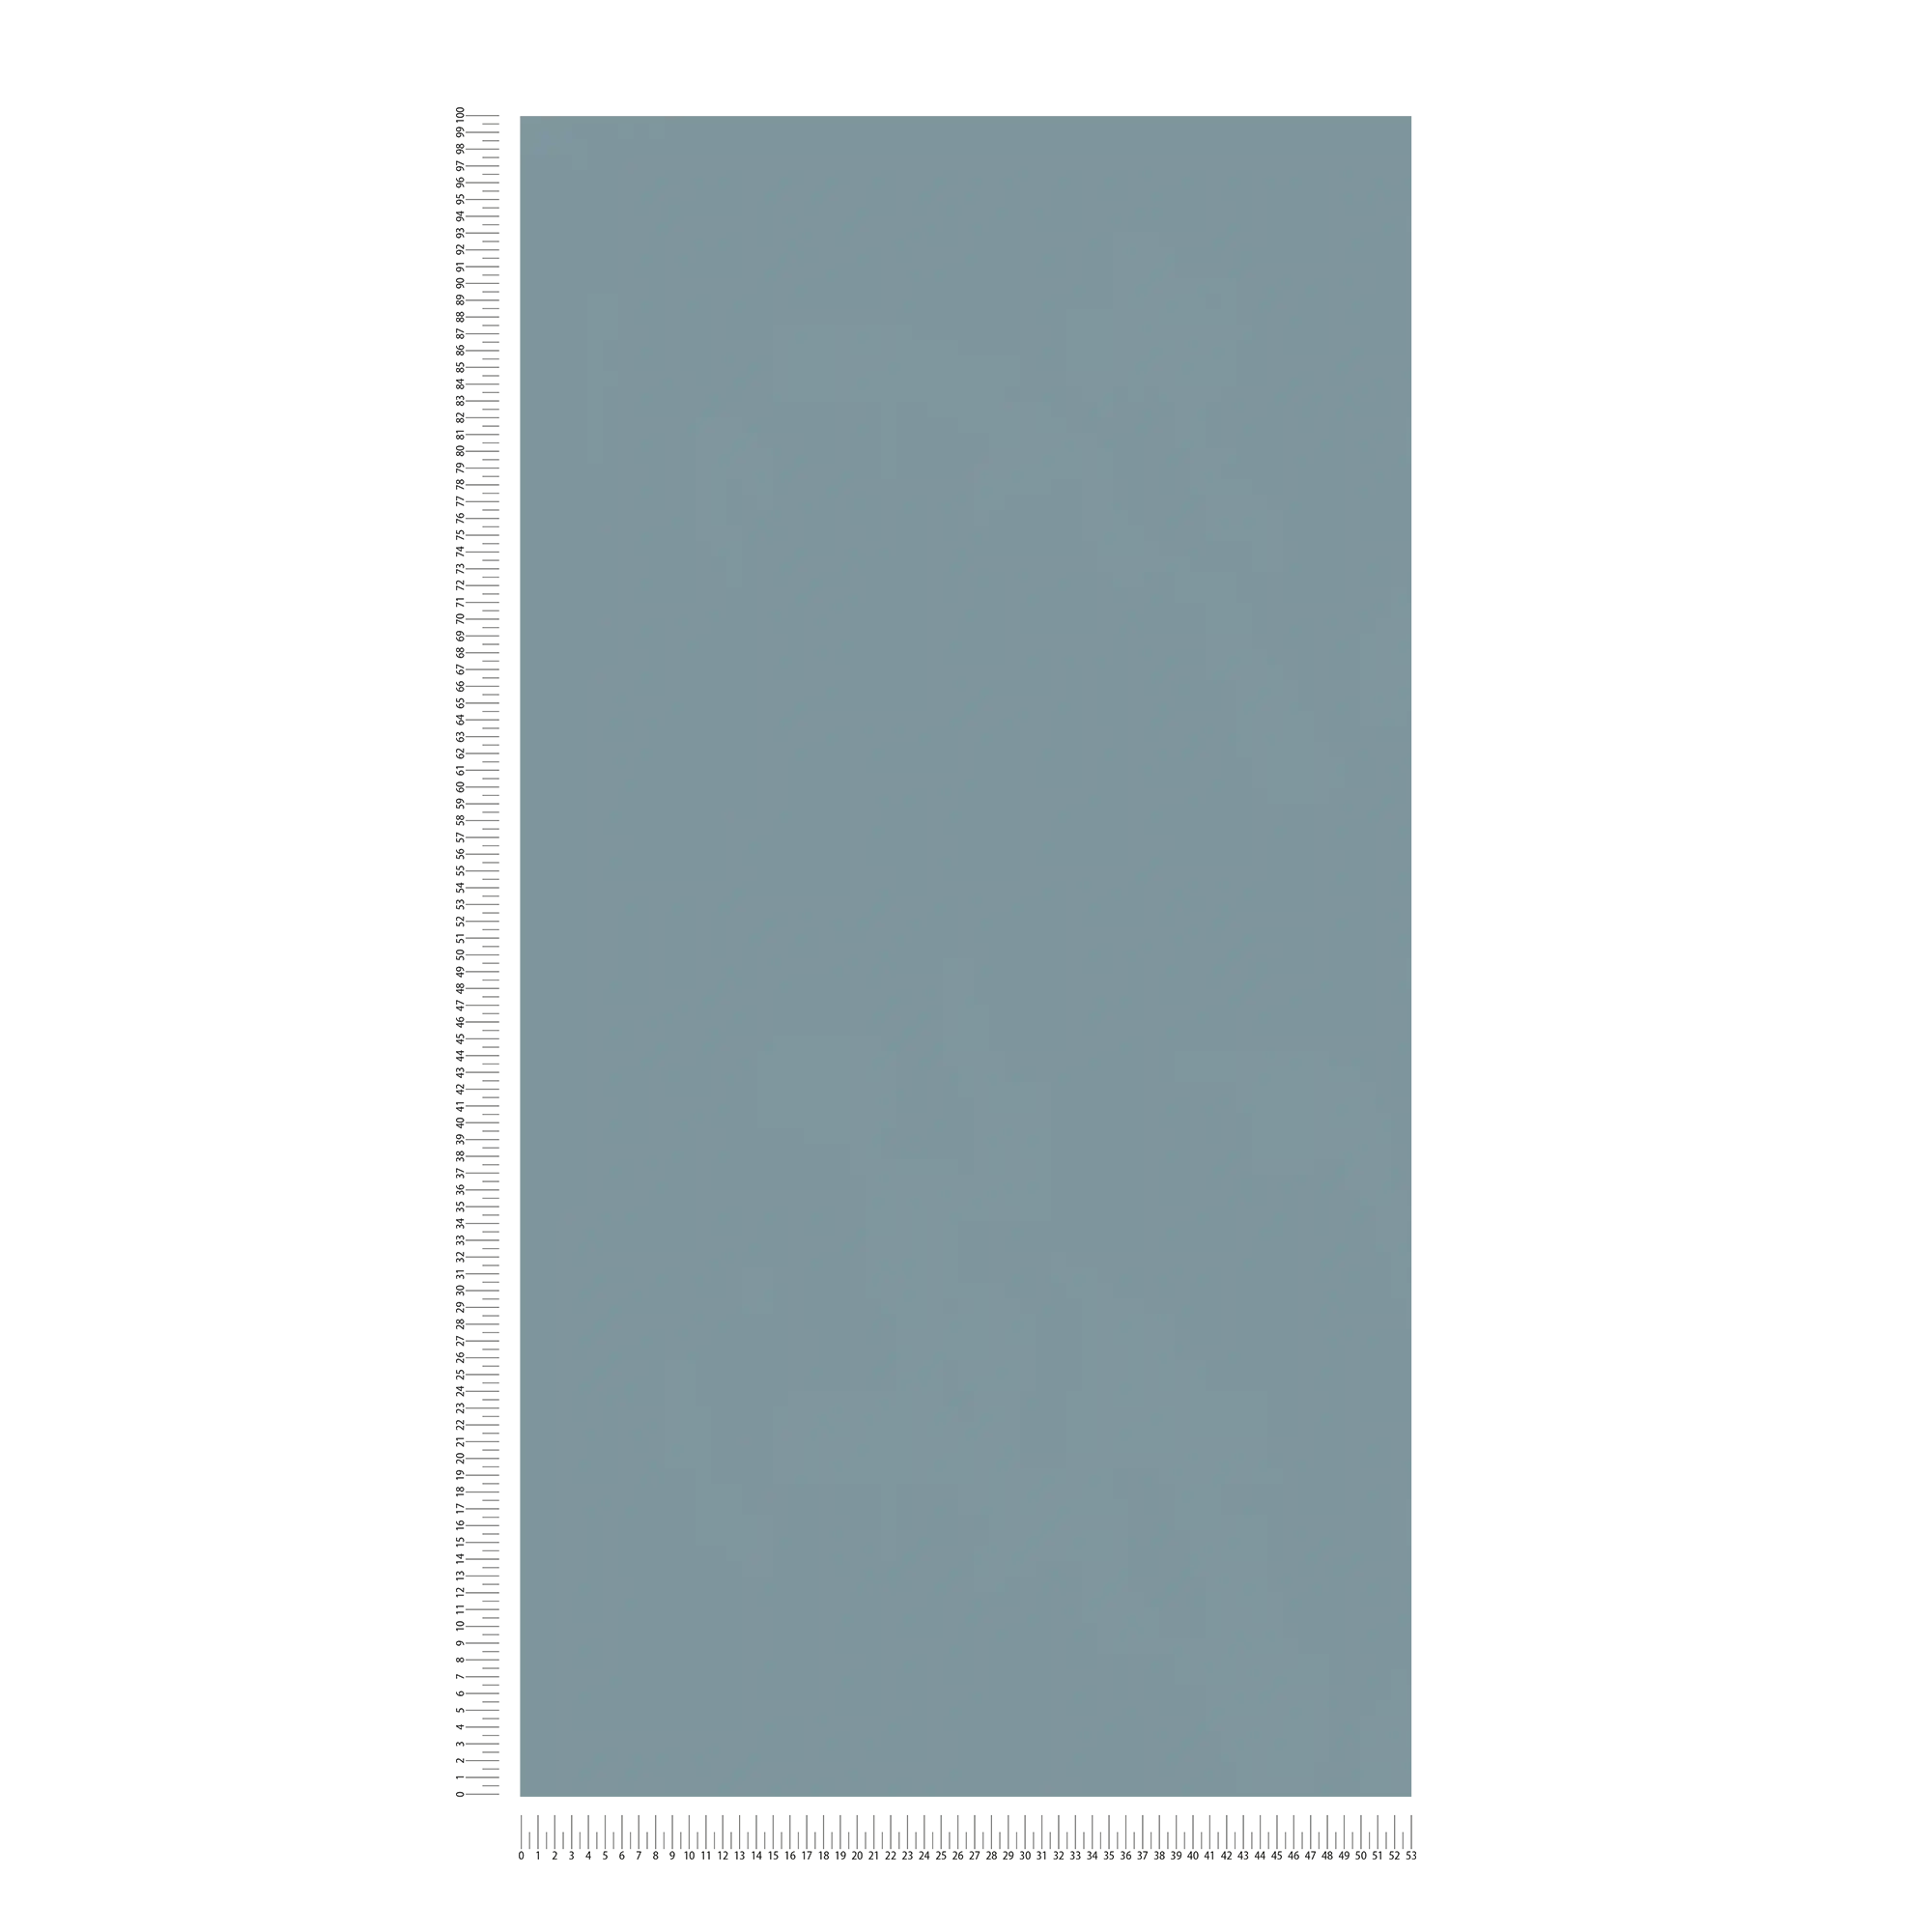             Wallpaper blue grey smooth non-woven, solid & matt - Blue
        